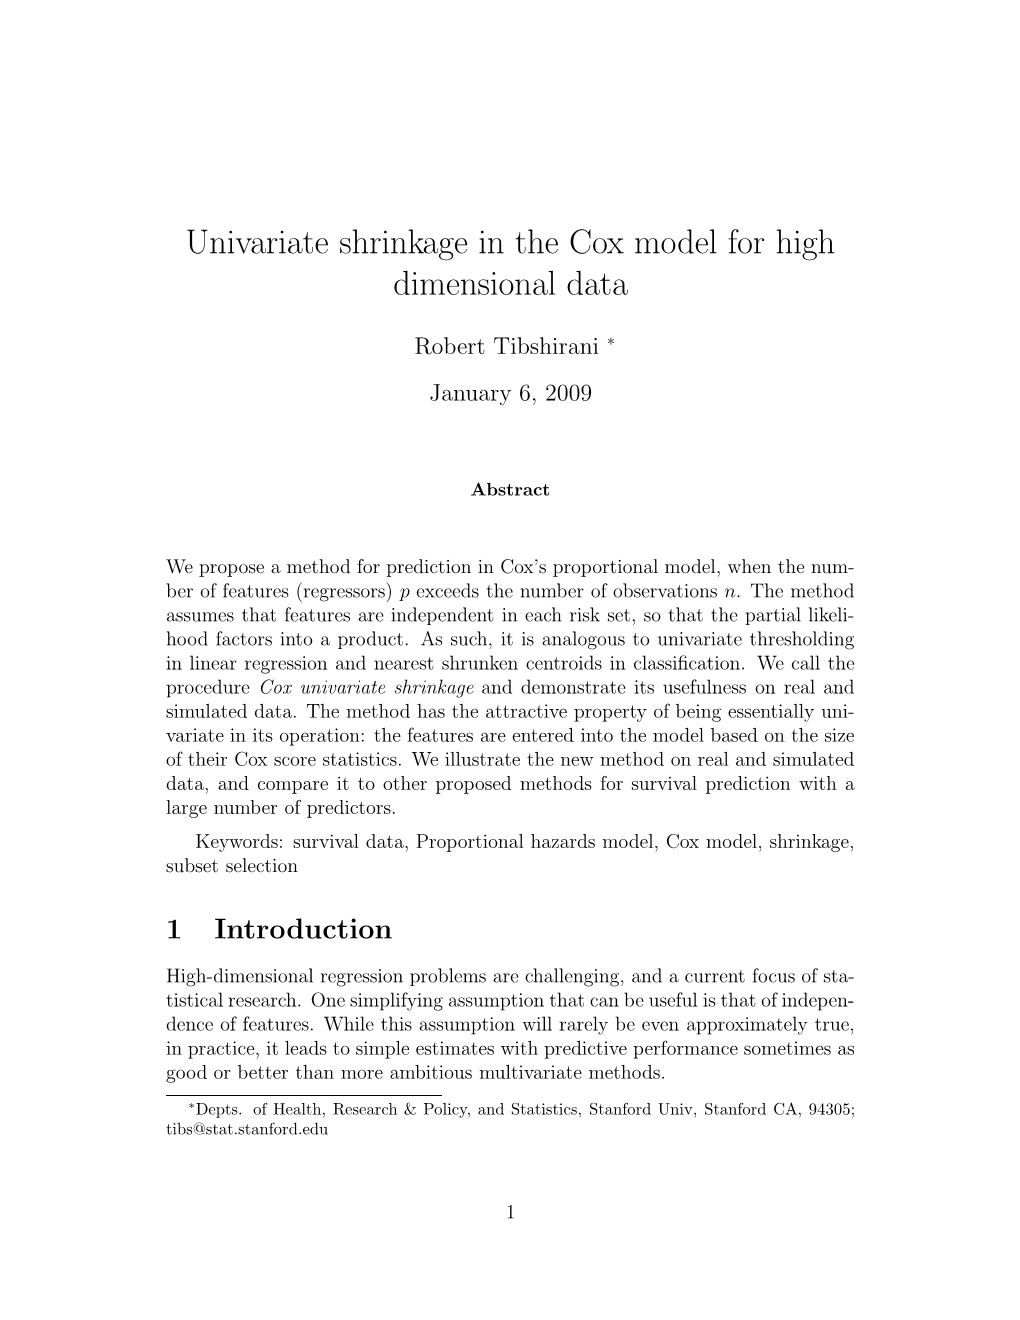 Univariate Shrinkage in the Cox Model for High Dimensional Data